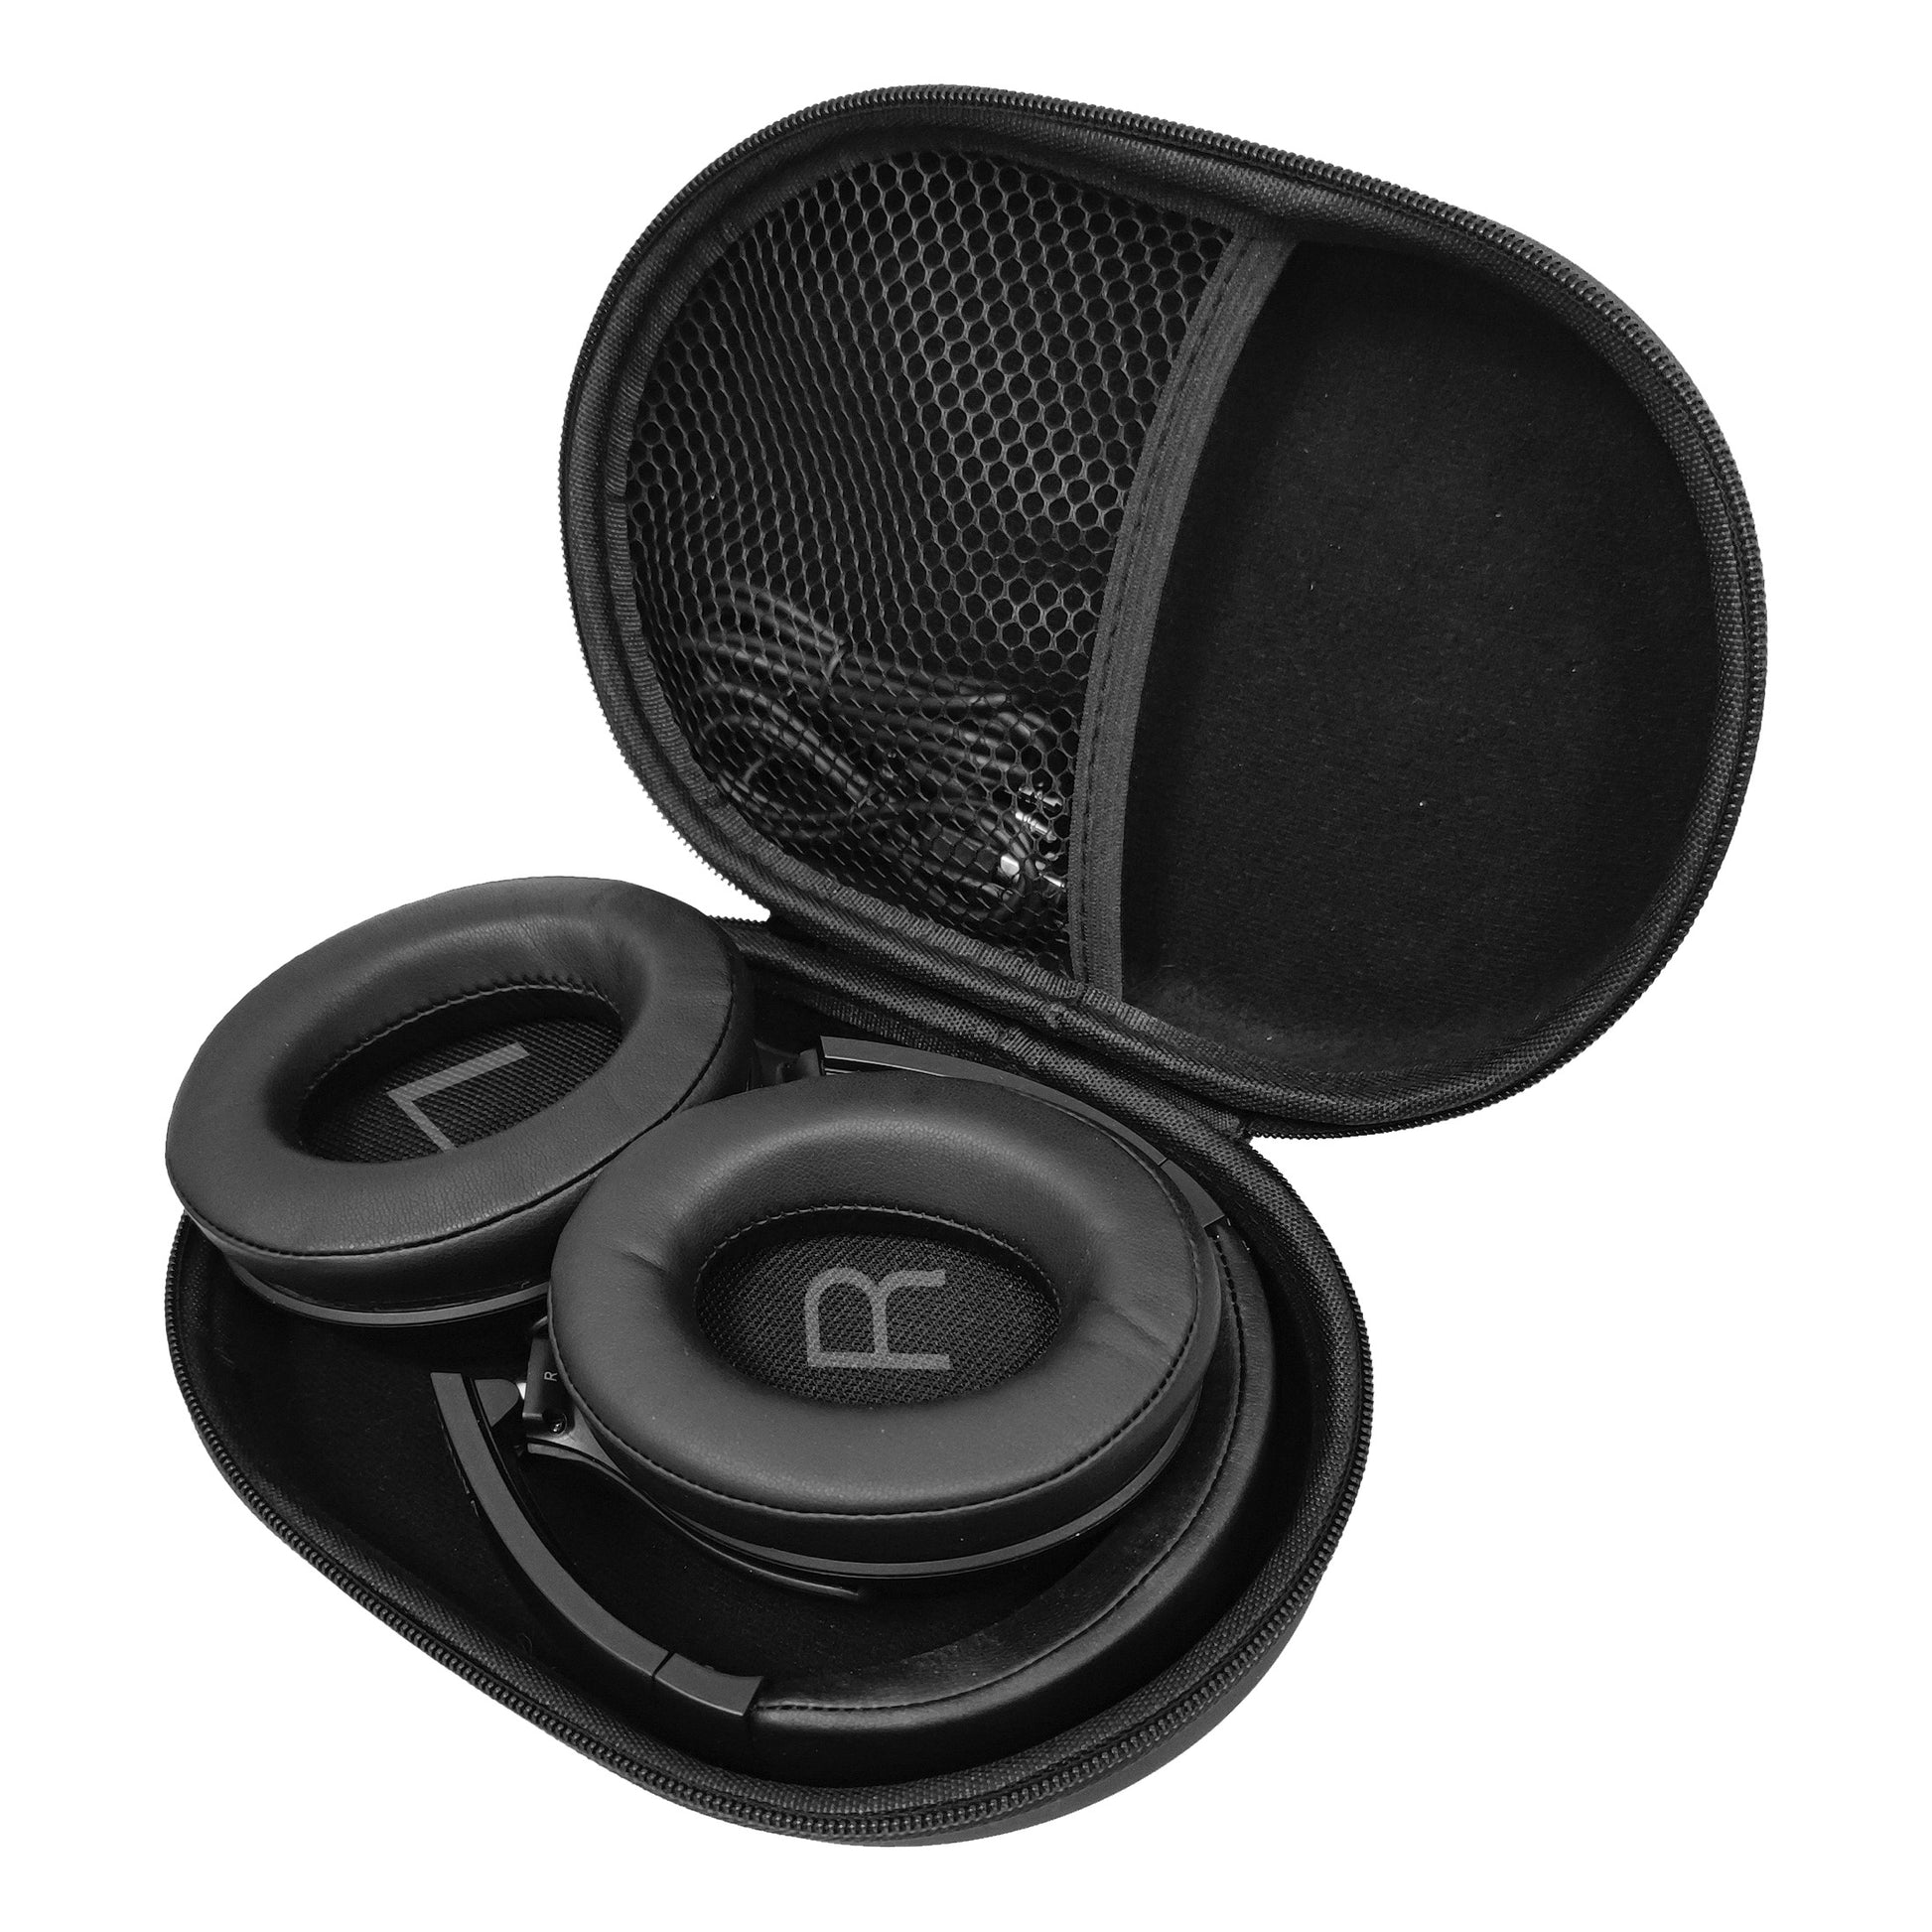 Photo of Morpheus 360 Krave ANC Wireless Headphones in its hardshell travel case.